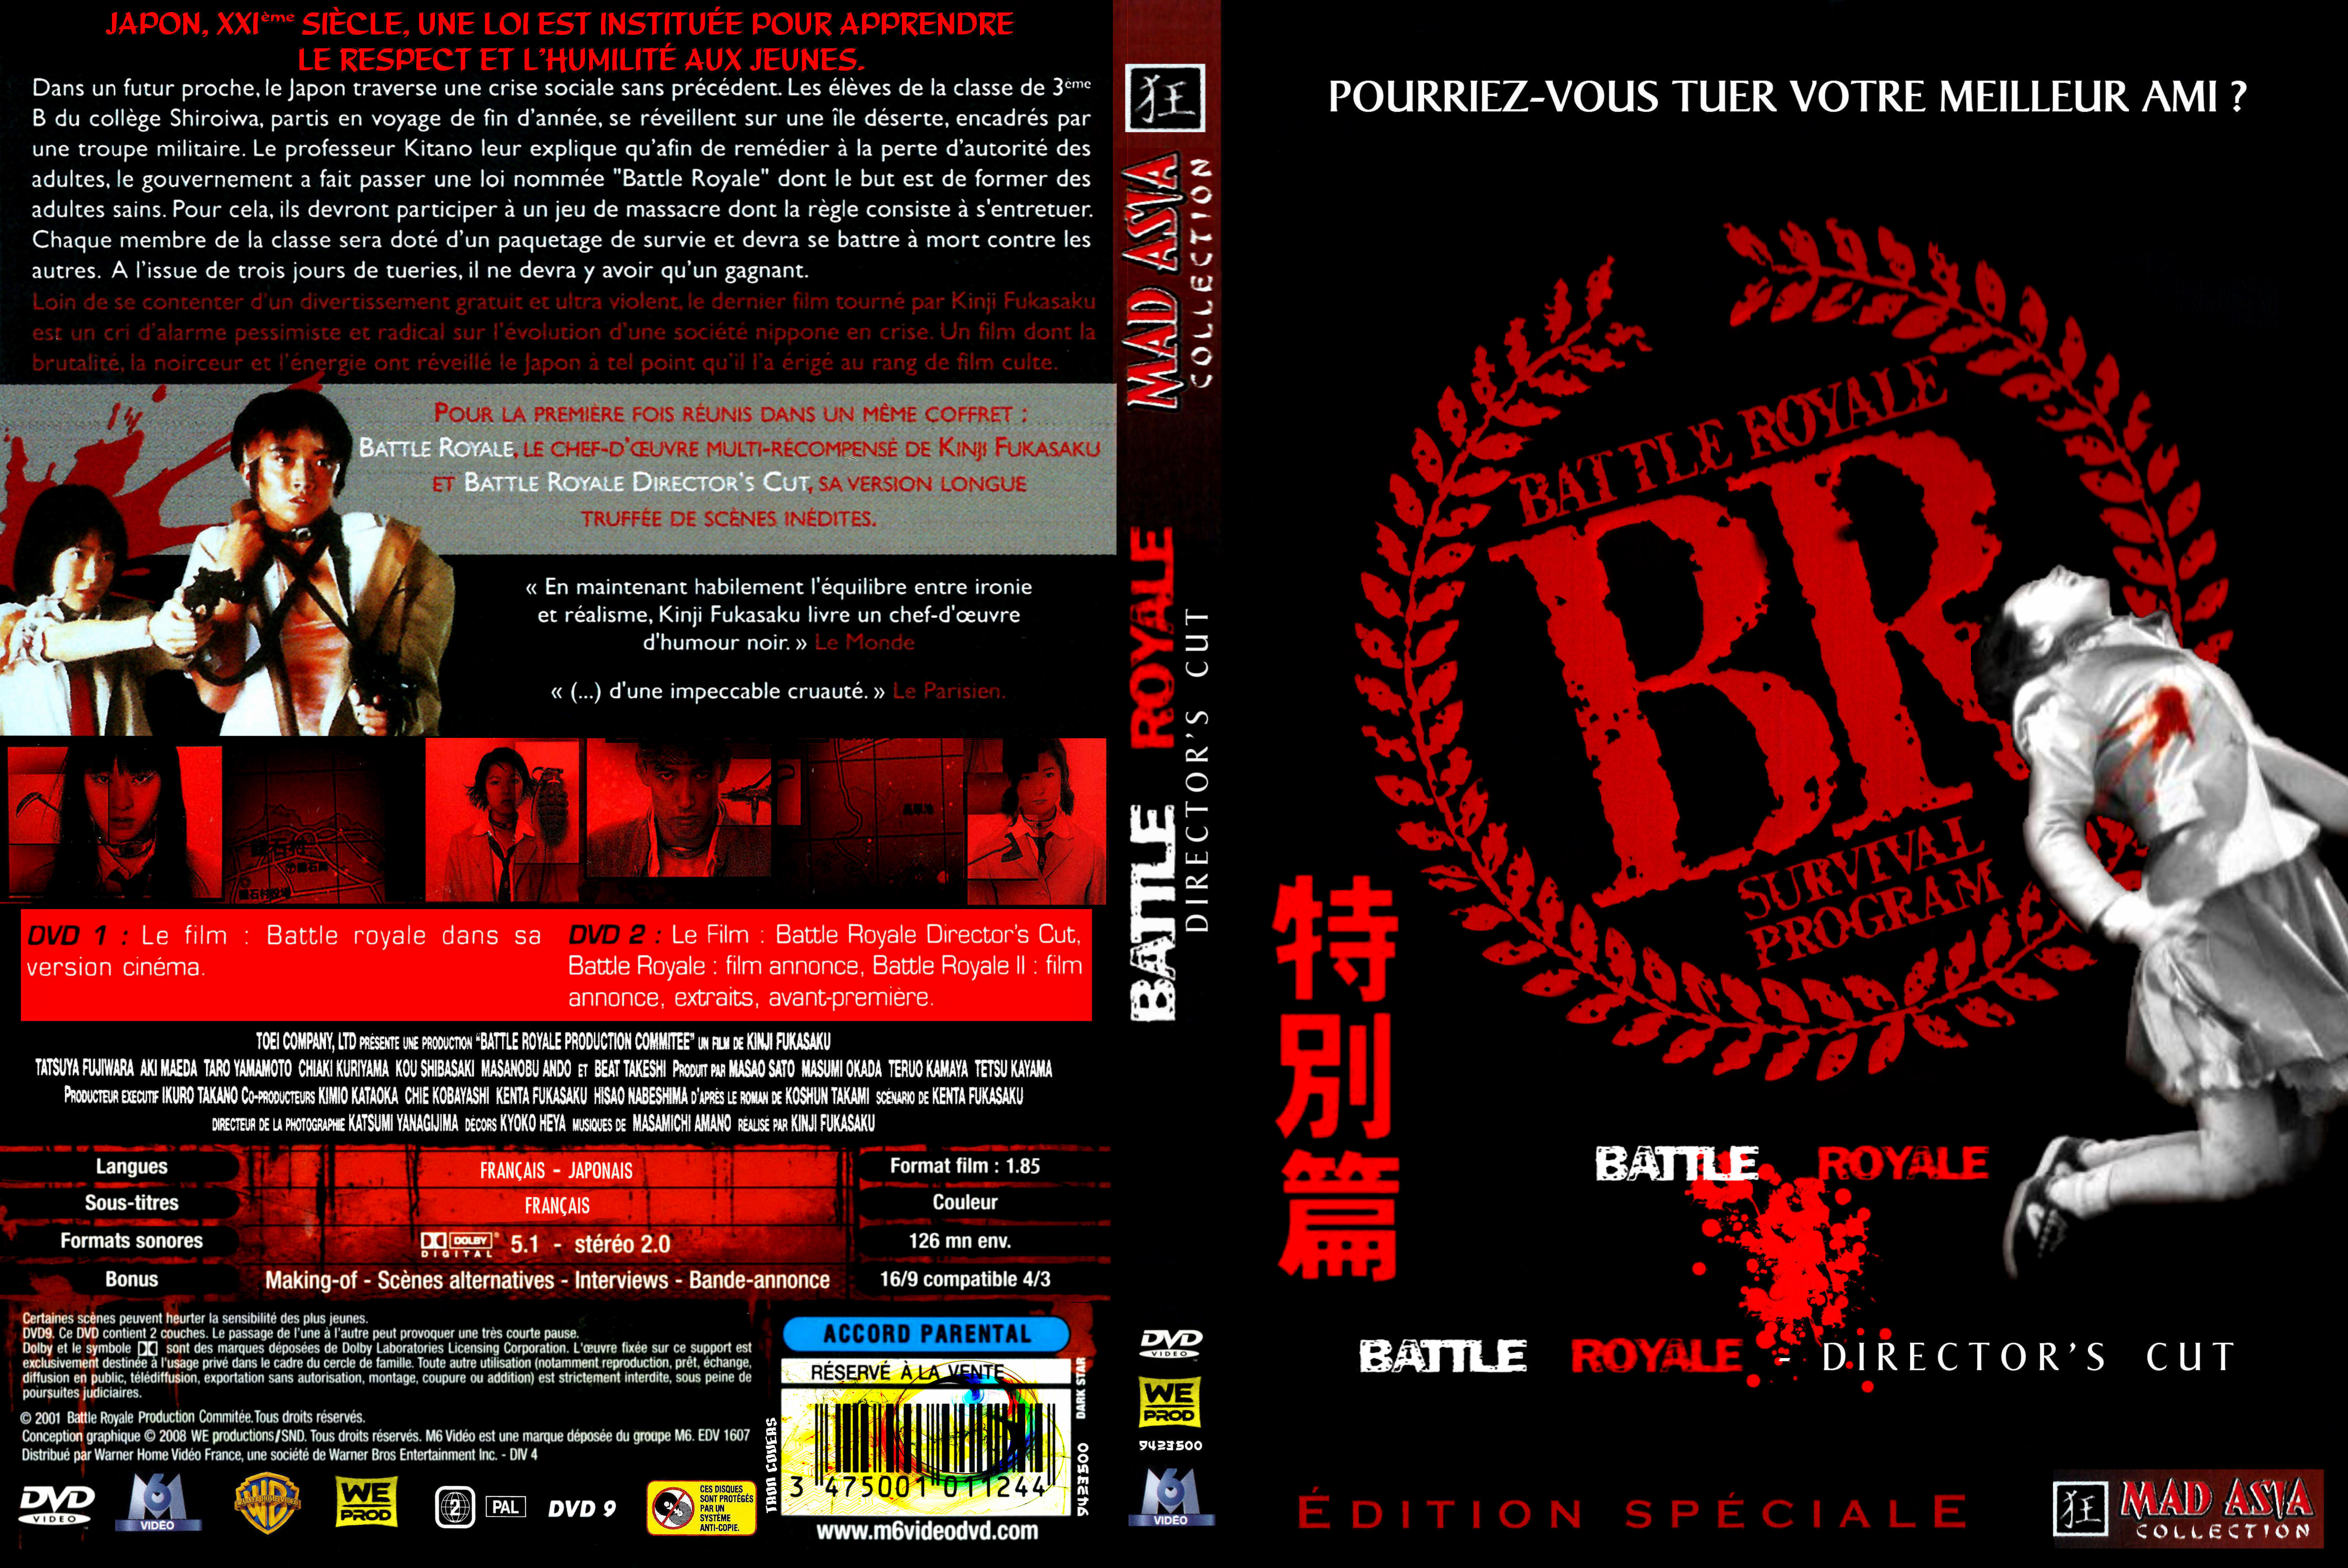 Jaquette DVD Battle Royale director cut custom